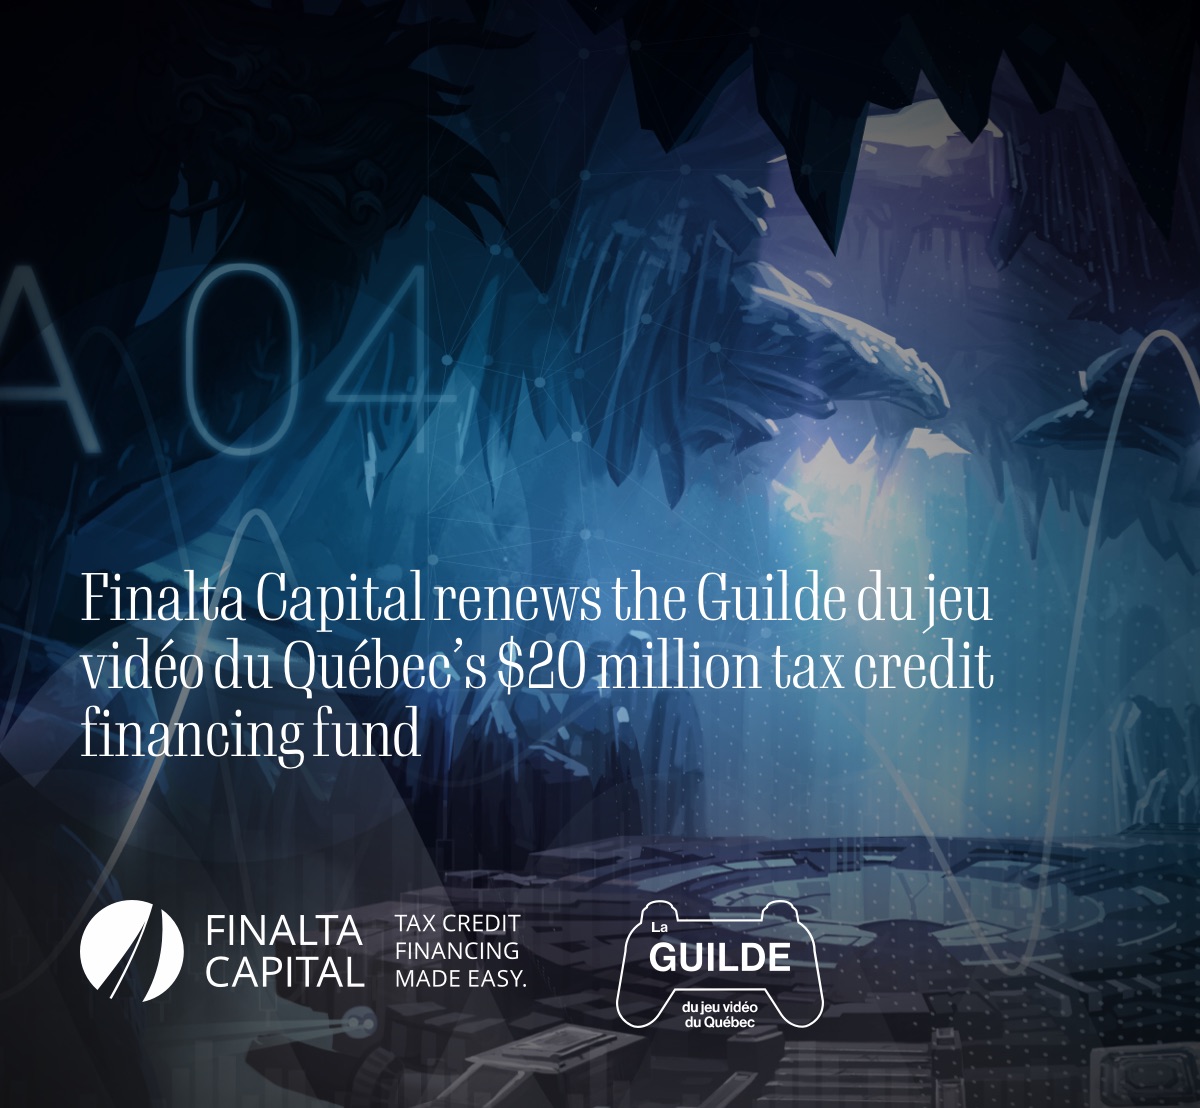 Finalta Capital renews the Guilde du jeu vidéo du Québec’s $20 million tax credit financing fund